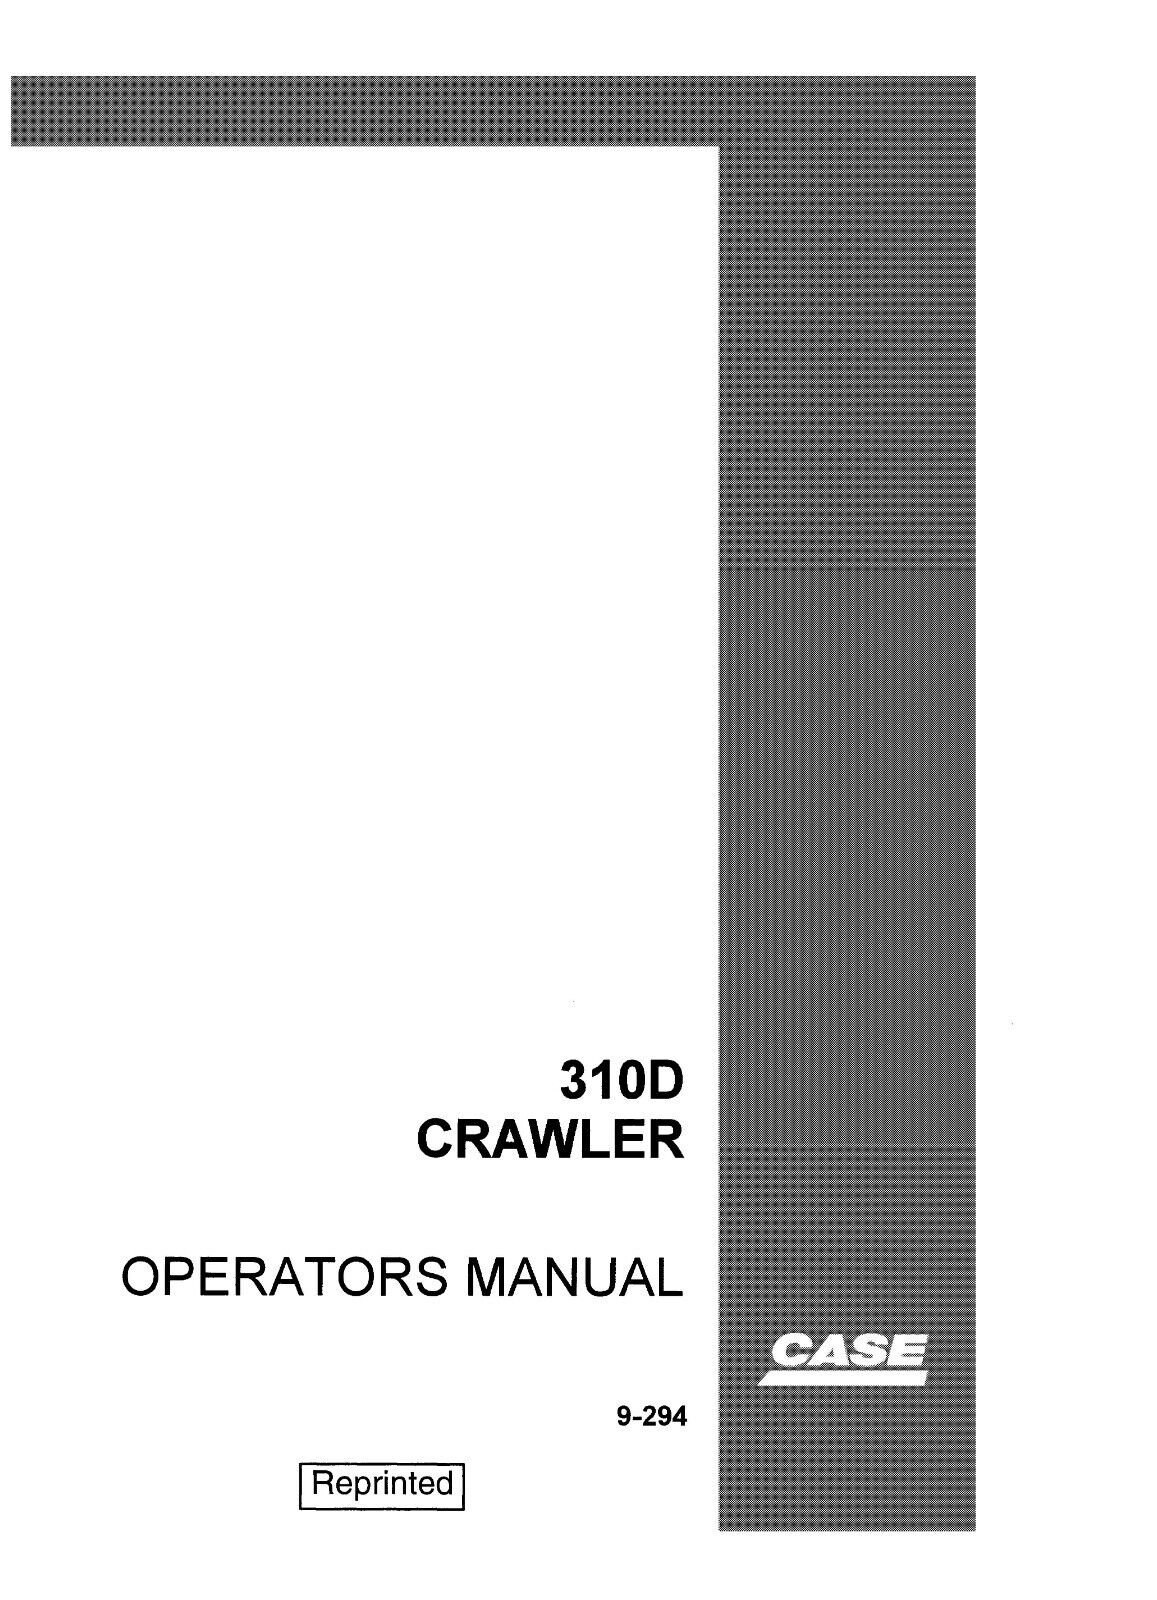 Crawler Operators Instruction Maintenance Manual Case 310D 9294